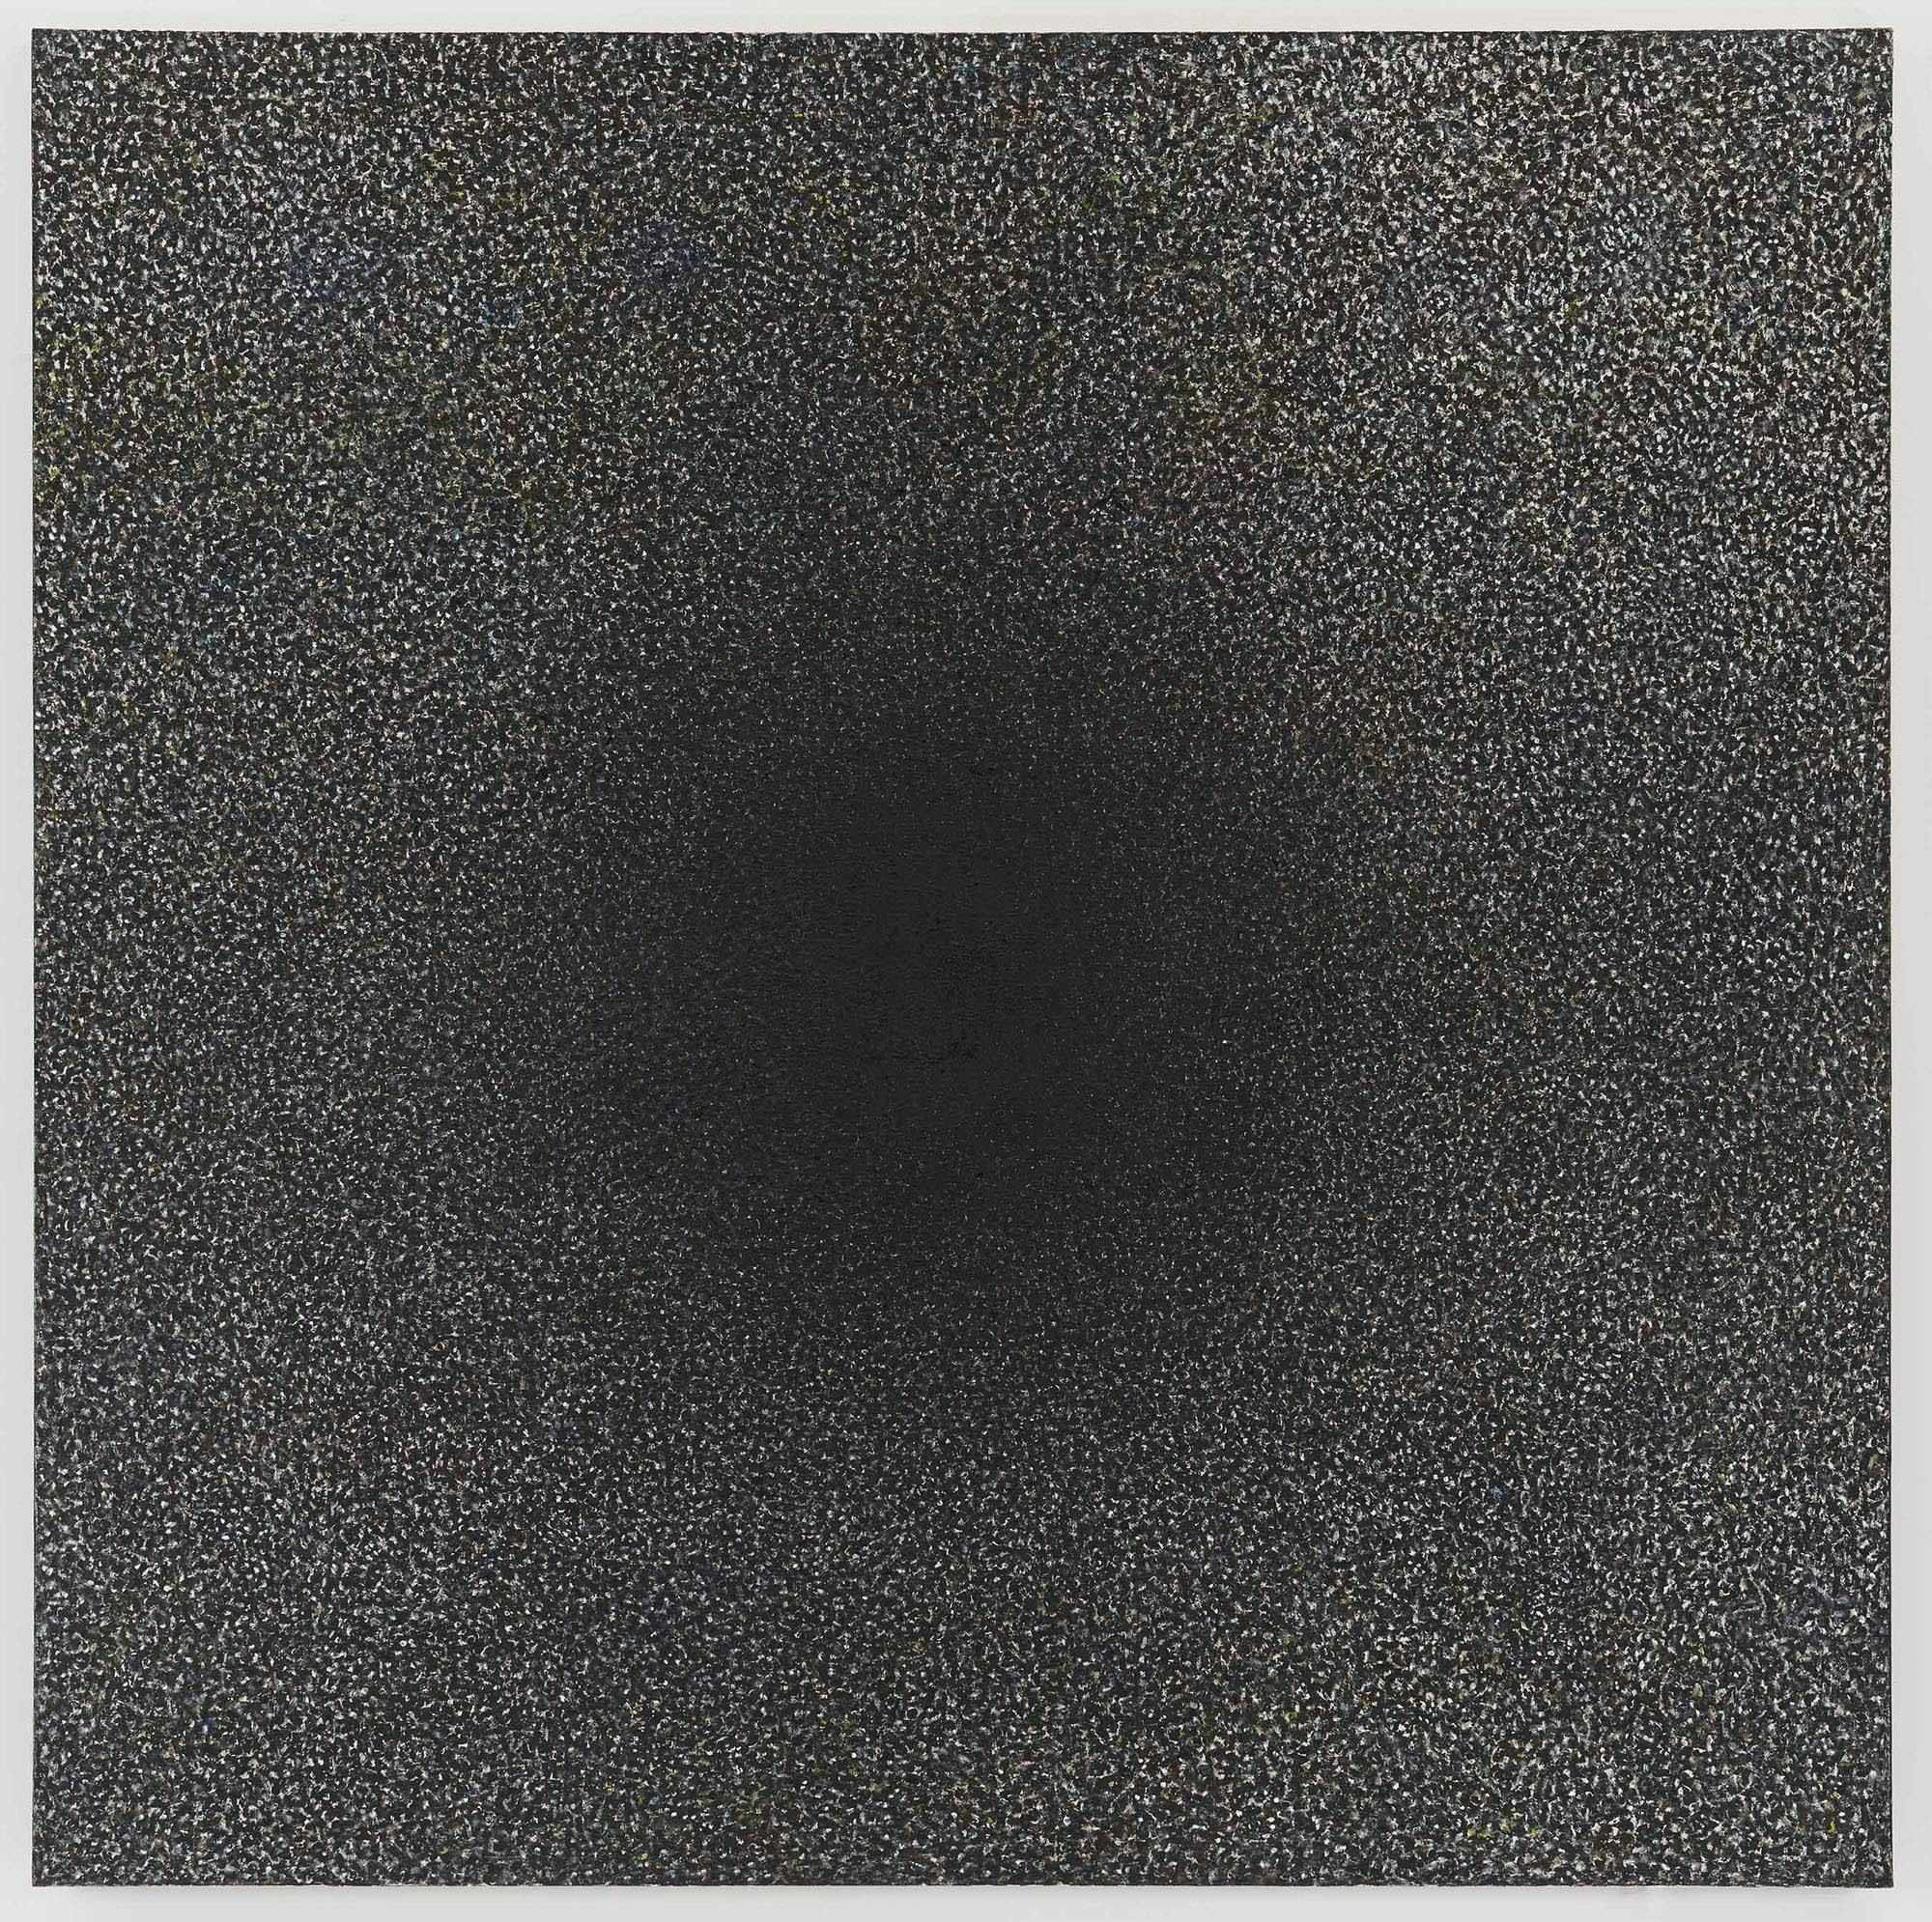 Presence Number 3, Black
1969
Oil on linen
80 x 80 in. (203.2 x 203.2 cm)
 – The Richard Pousette-Dart Foundation